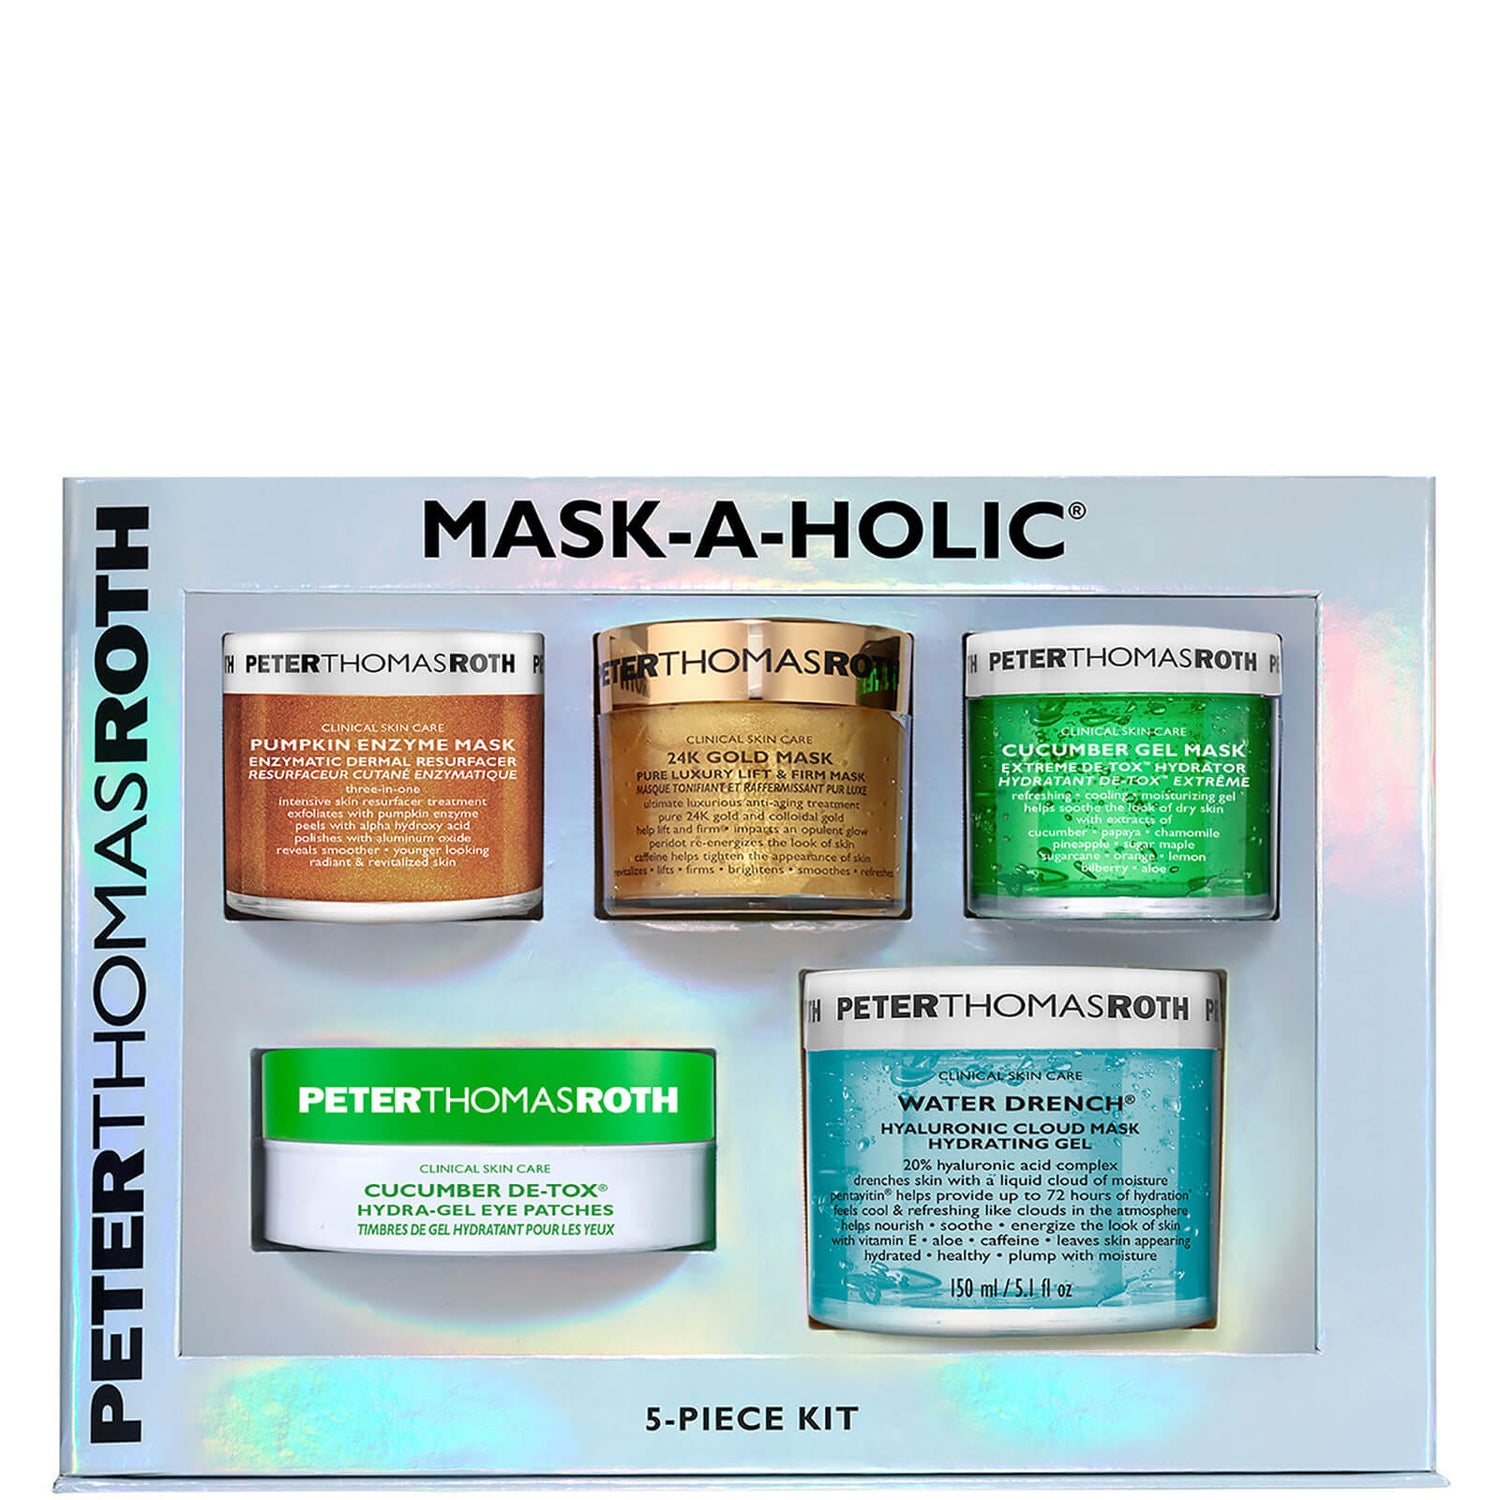 Peter Thomas Roth Mask-A-Holic Kit